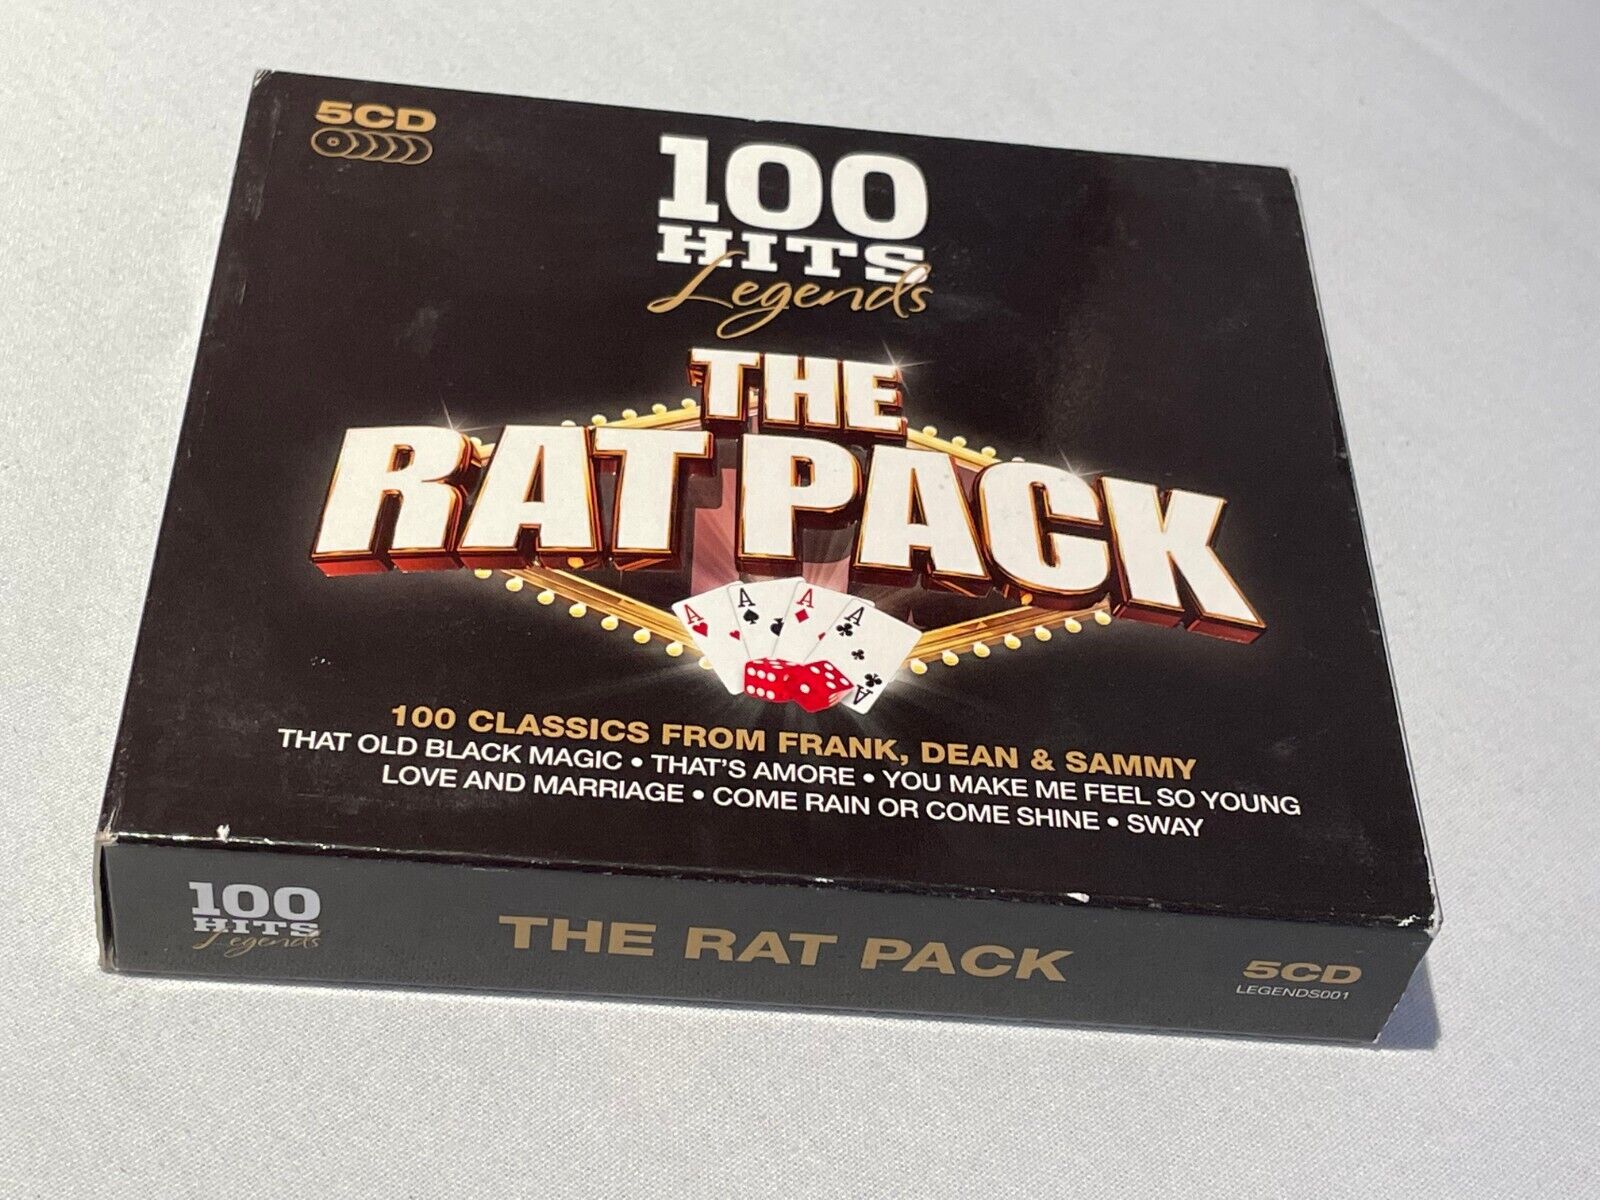 The Rat Pack 100 Hits - 5 CD's Album Box Set - 2009 Demon Music - Frank Sinatra